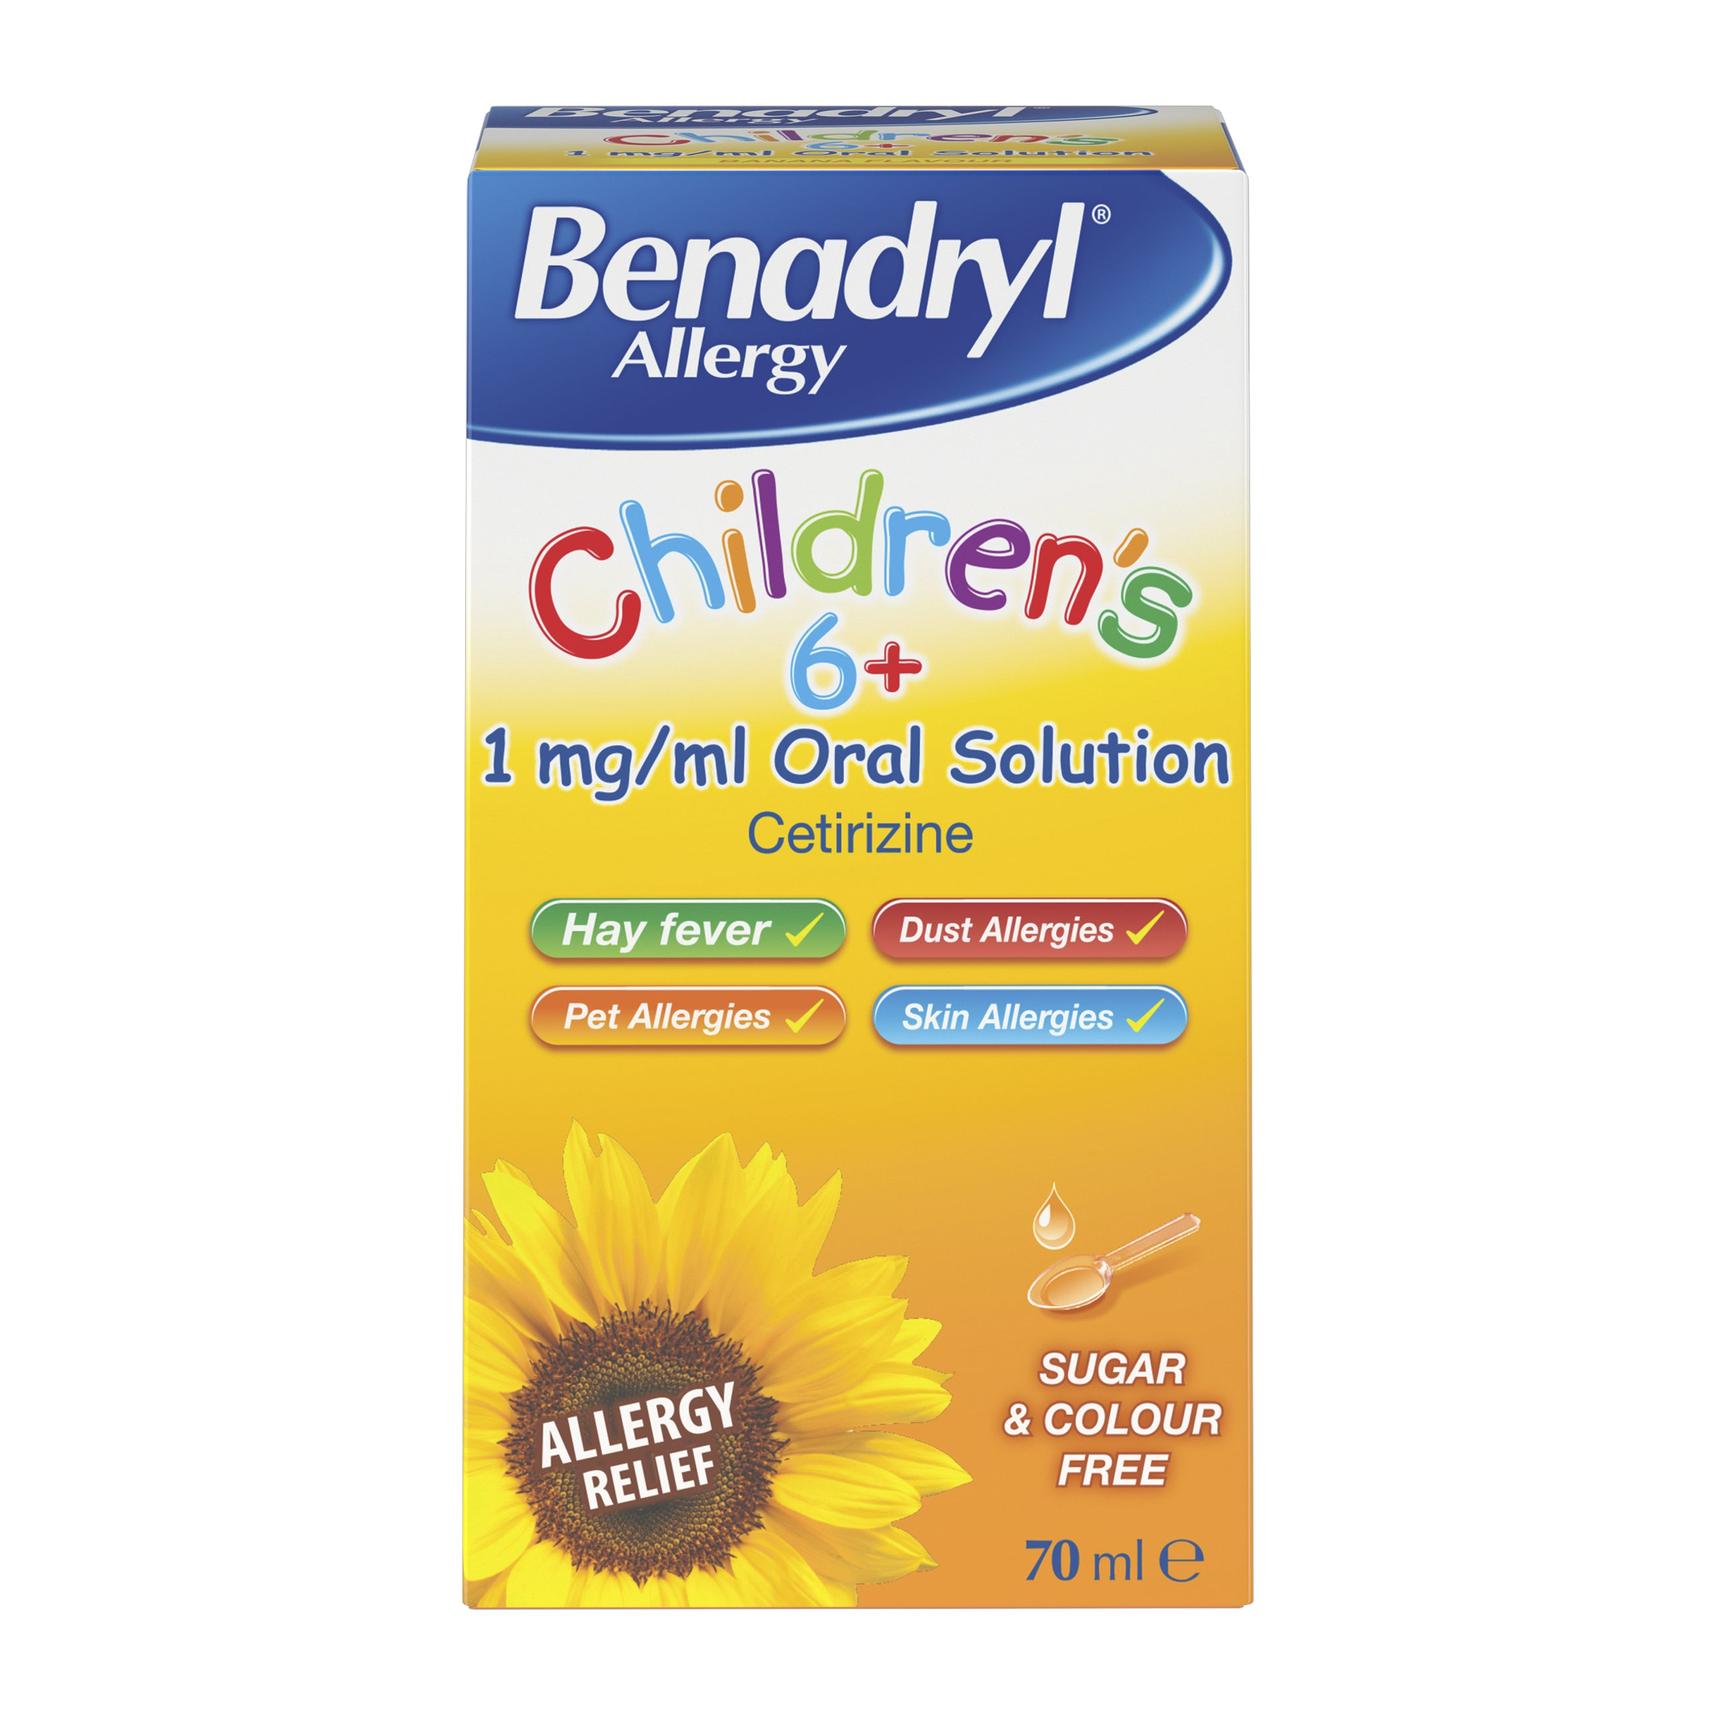 BENADRYL allergy children's 6+ 1mg/ml oral solution offers at £579 in Lloyds Pharmacy